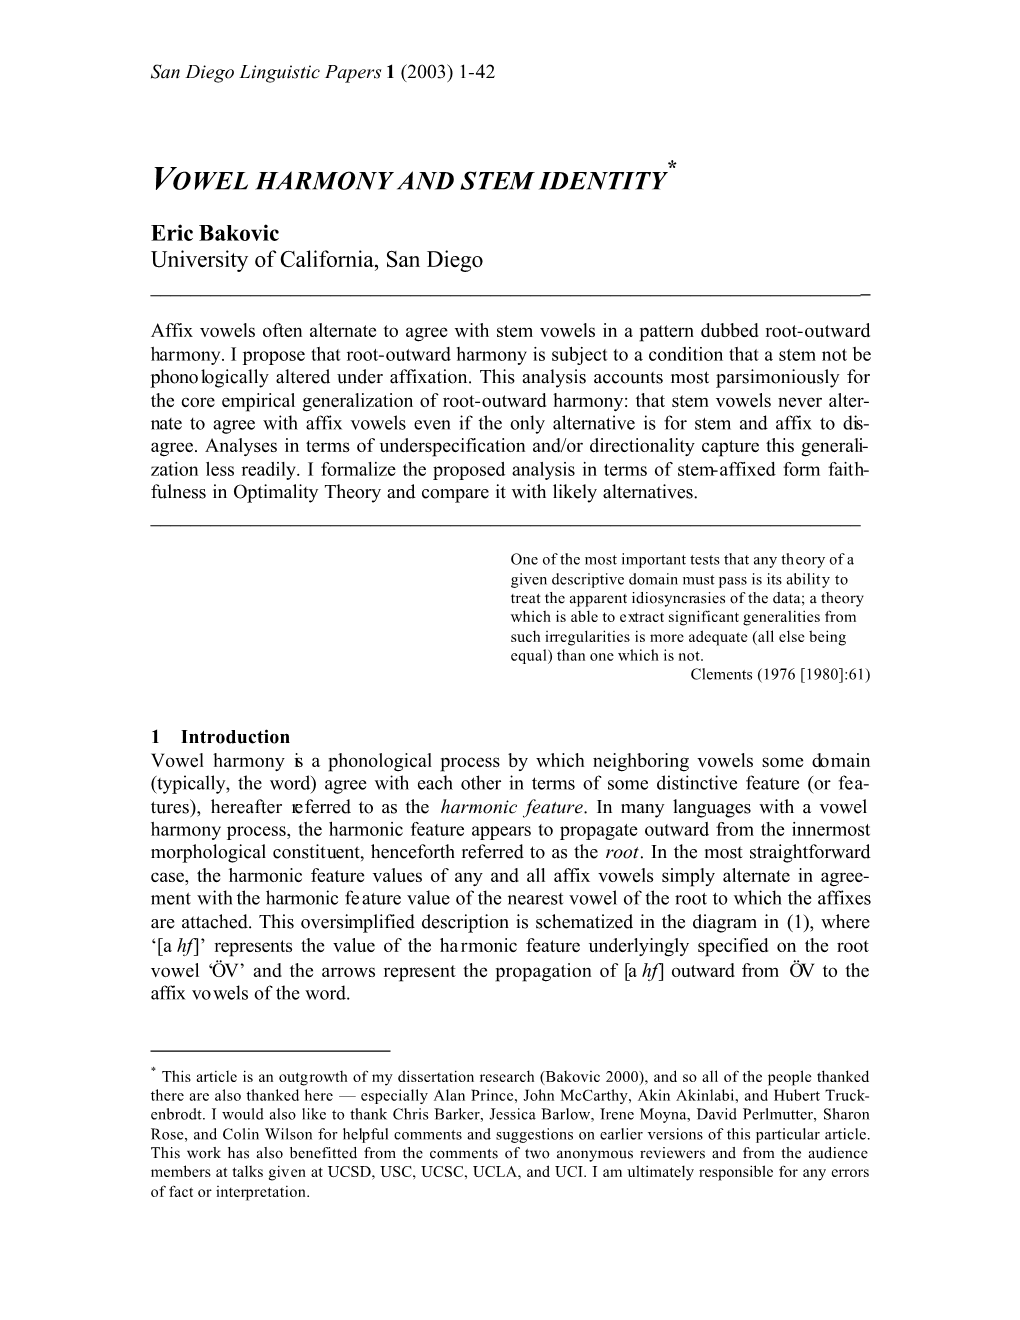 Vowel Harmony and Stem Identity